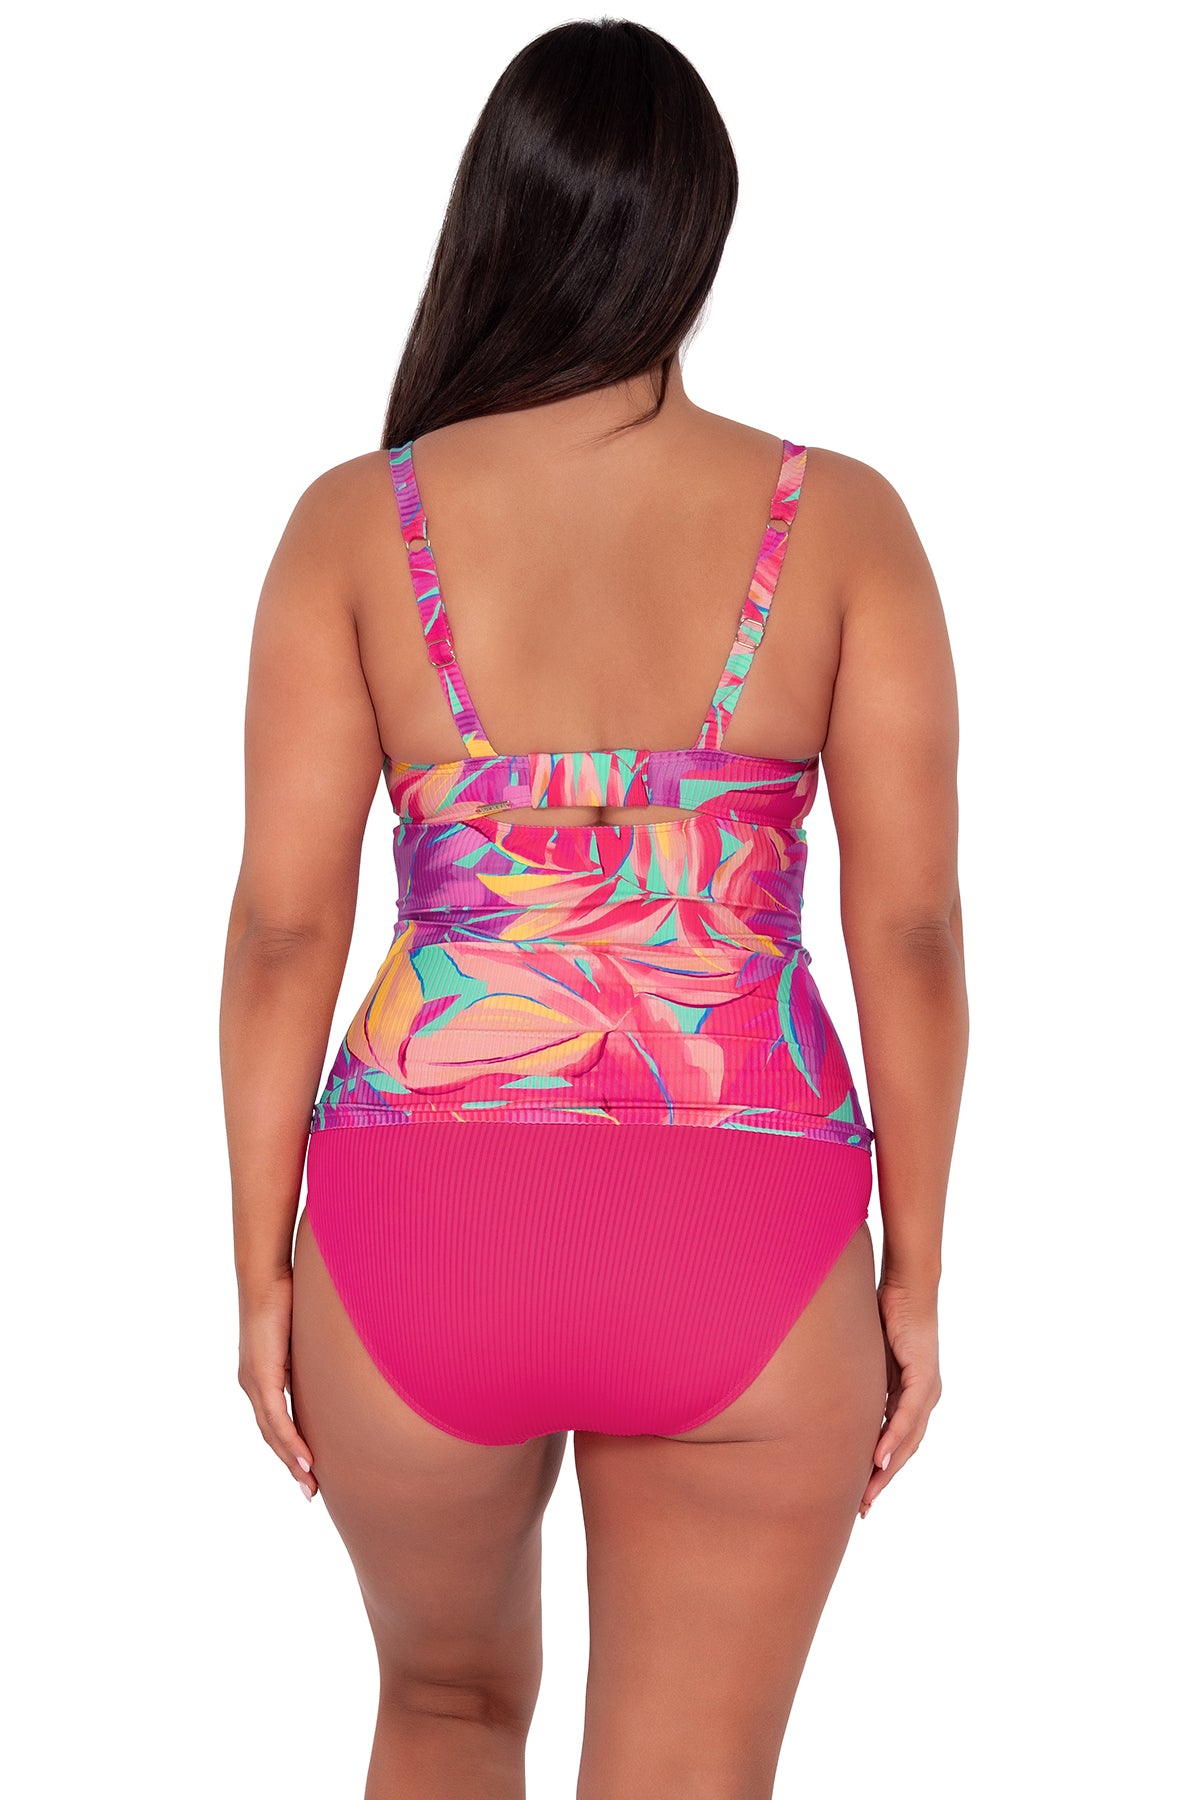 Back pose #1 of Nicki wearing Sunsets Oasis Sandbar Rib Serena Tankini Top paired with Hannah High Waist bikini bottom